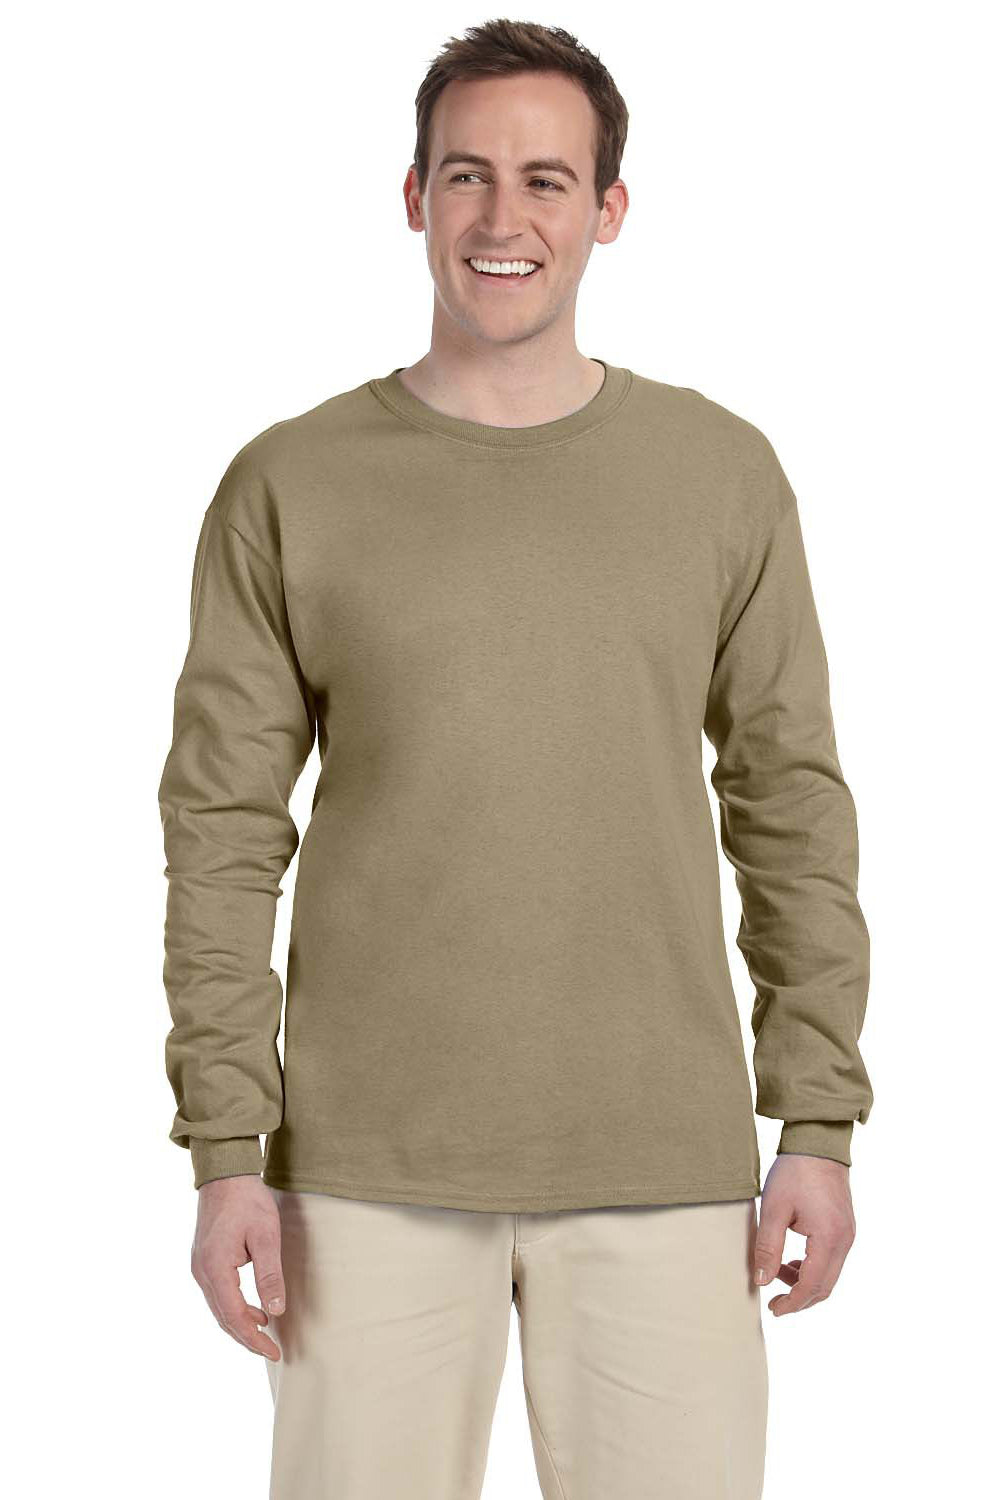 Fruit Of The Loom 4930 Mens HD Jersey Long Sleeve Crewneck T-Shirt Khaki Brown Front